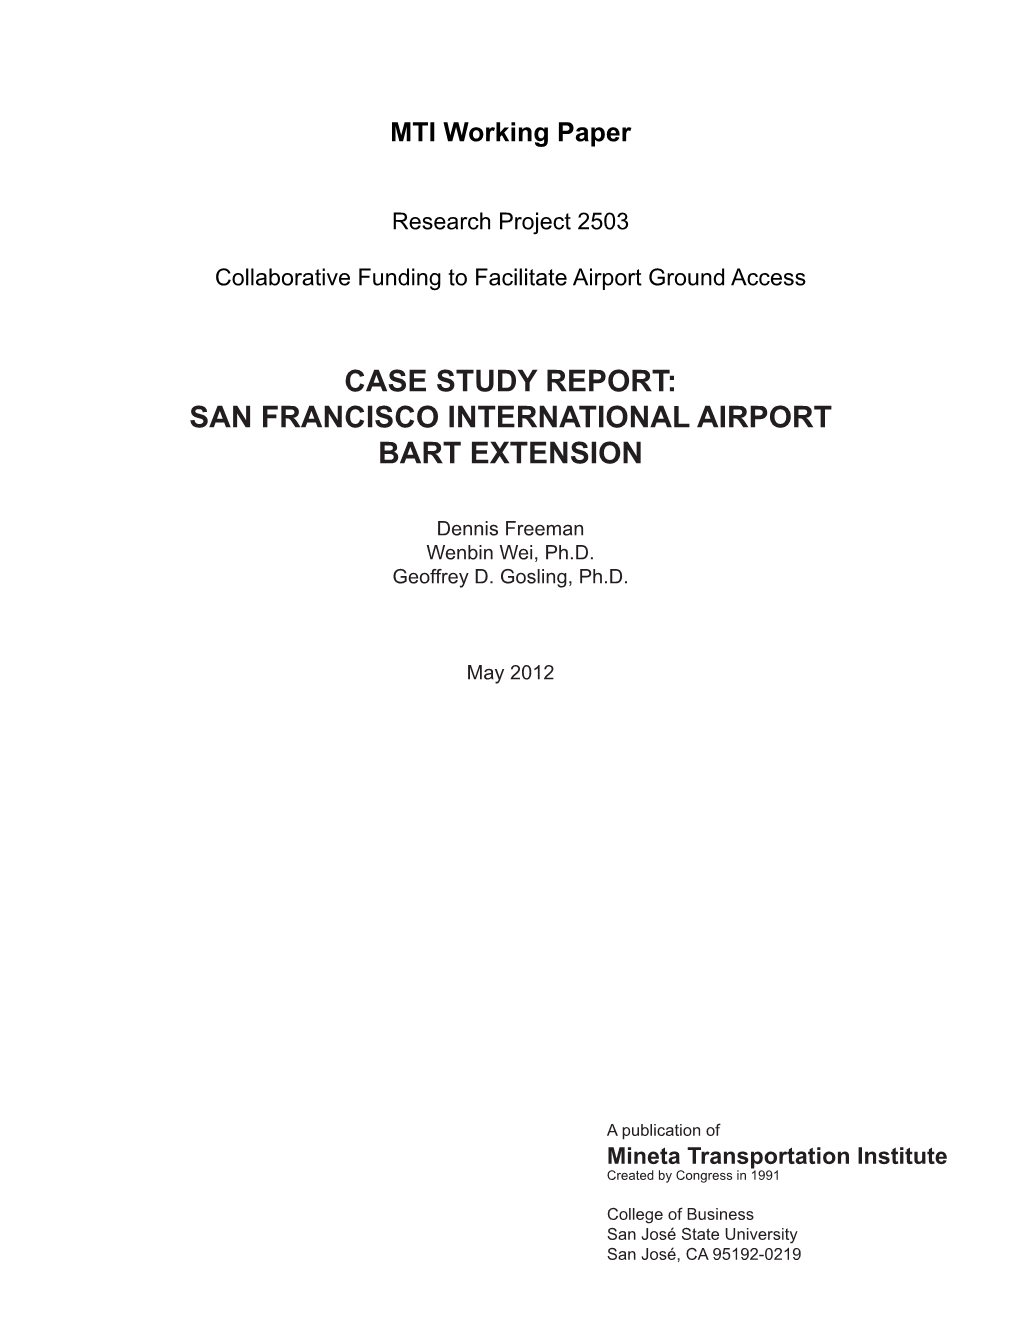 Case Study Report: San Francisco International Airport Bart Extension